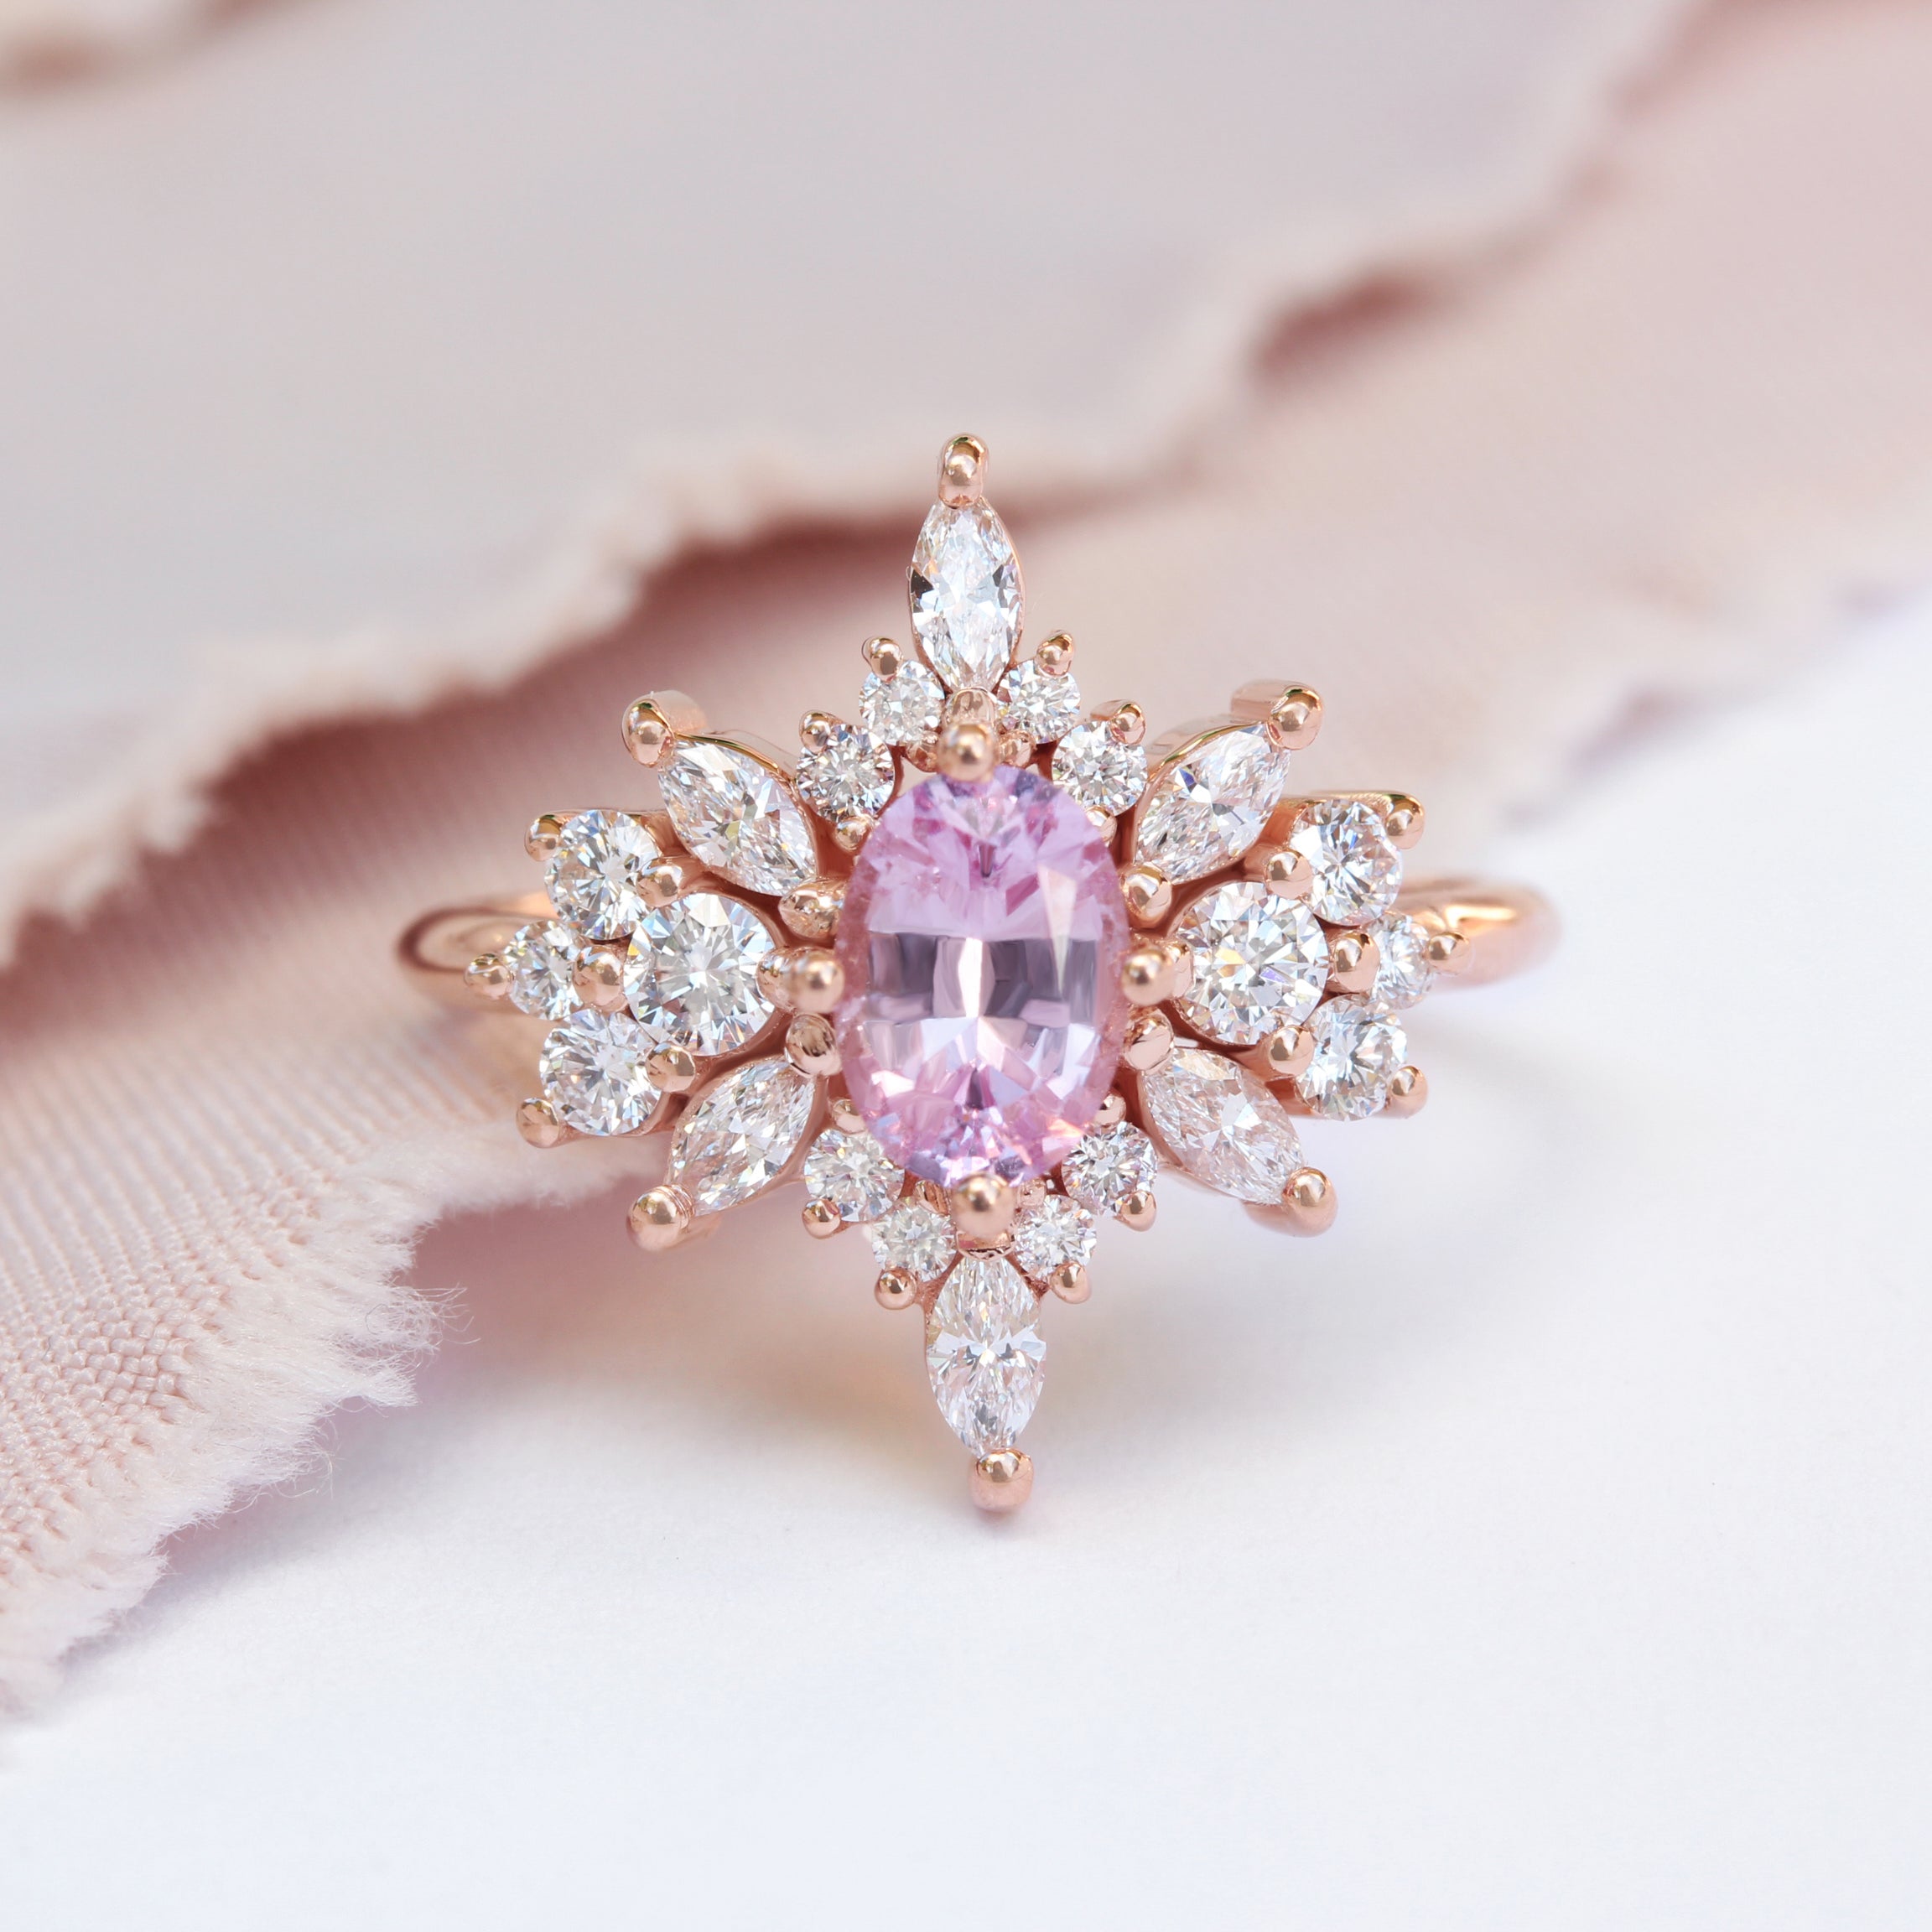 Oval pink sapphire & diamonds engagement ring,  Phoenix ♥